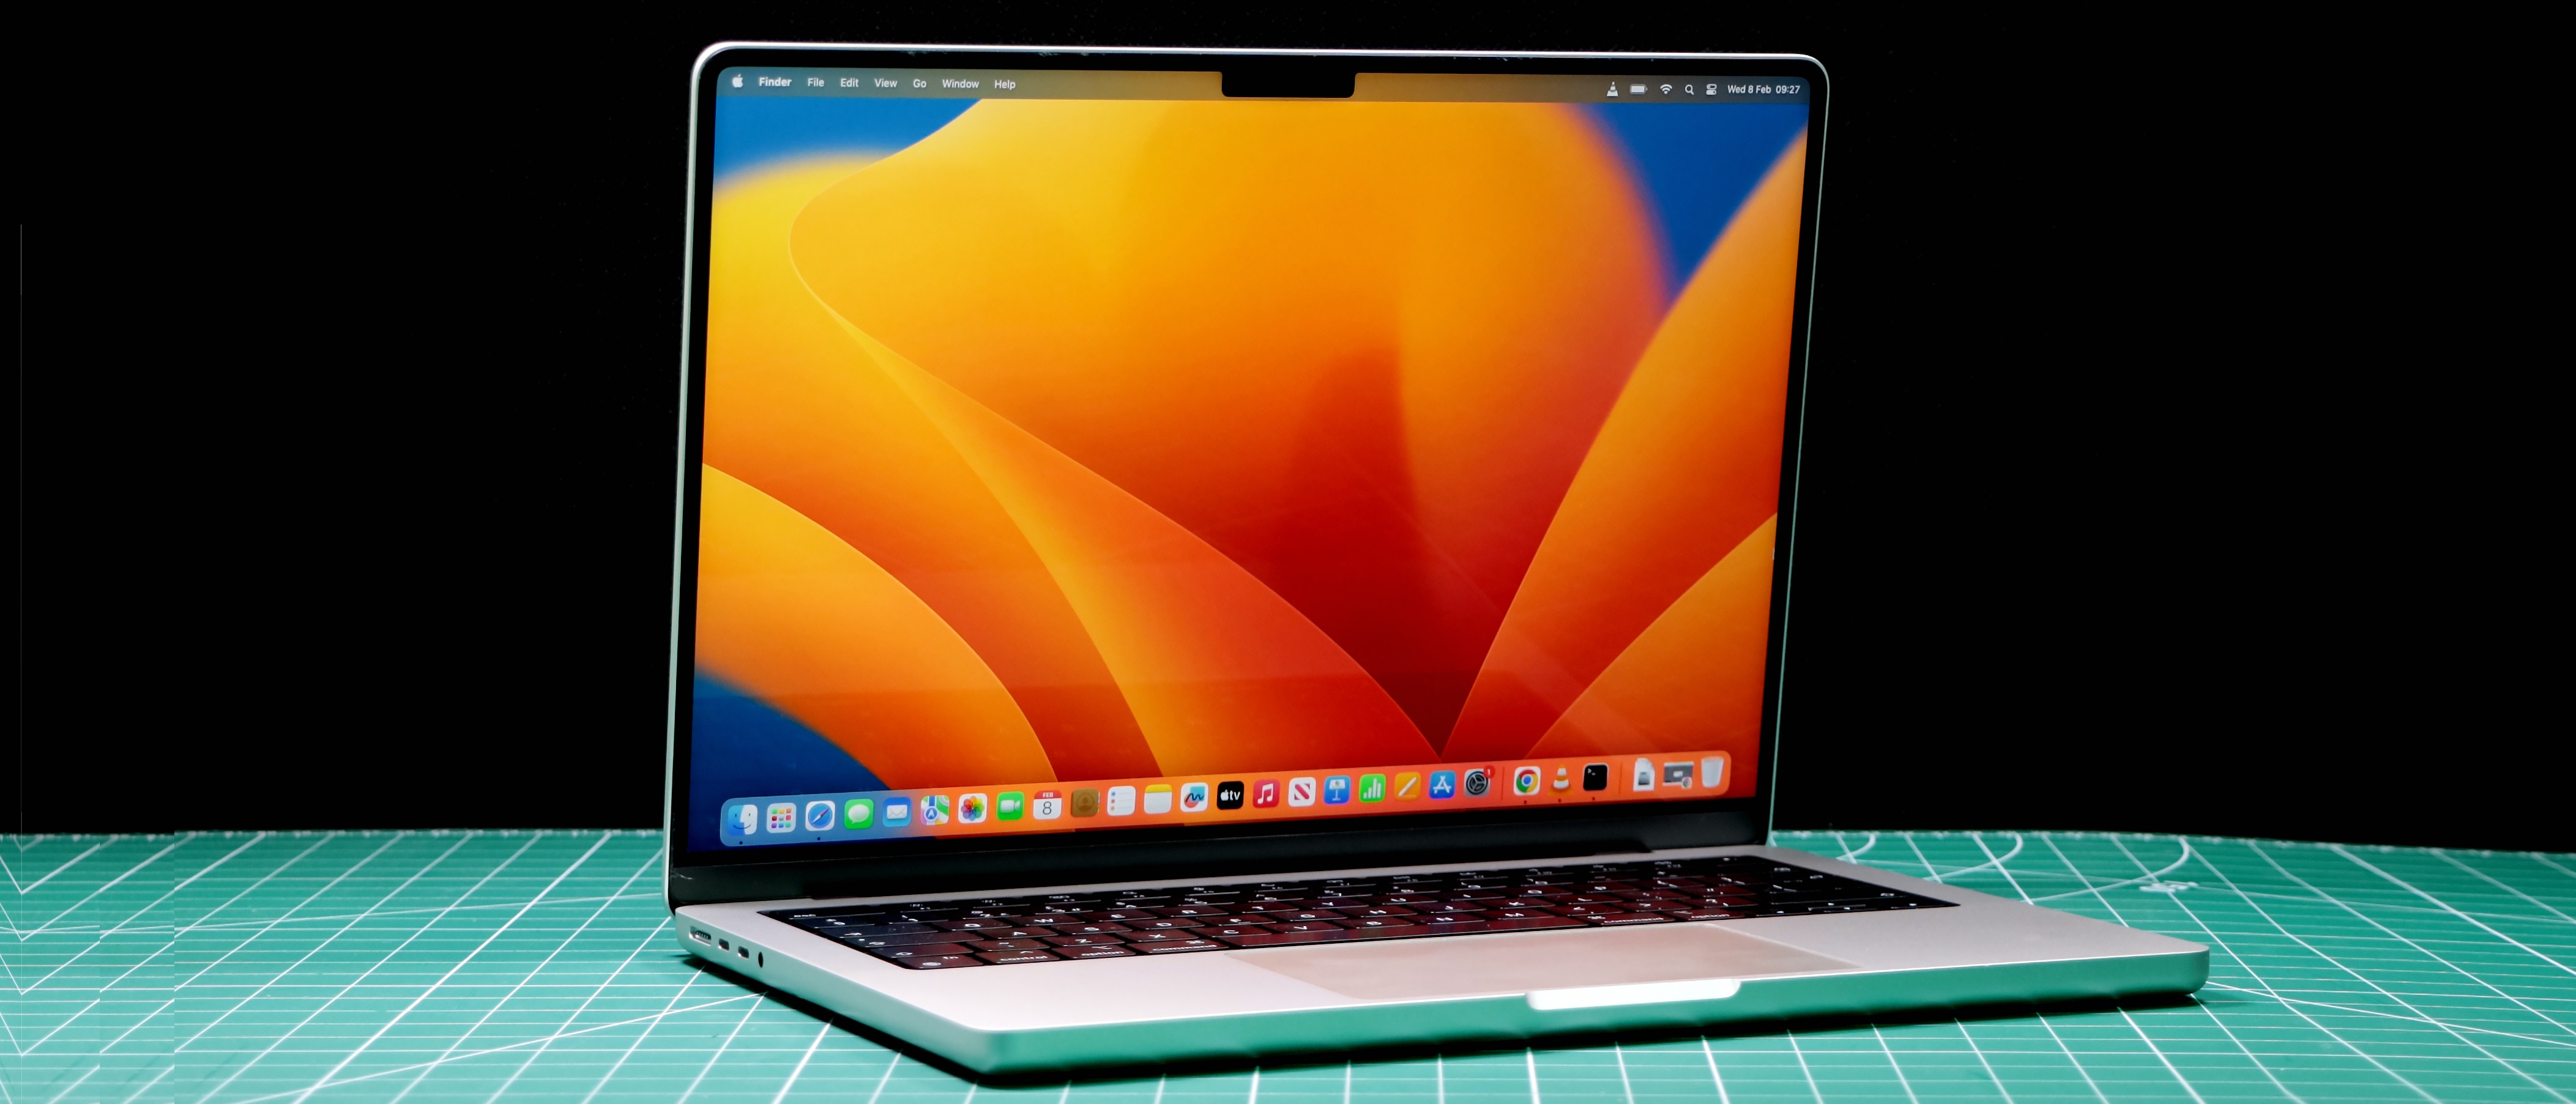 MacBook Pro 14 review